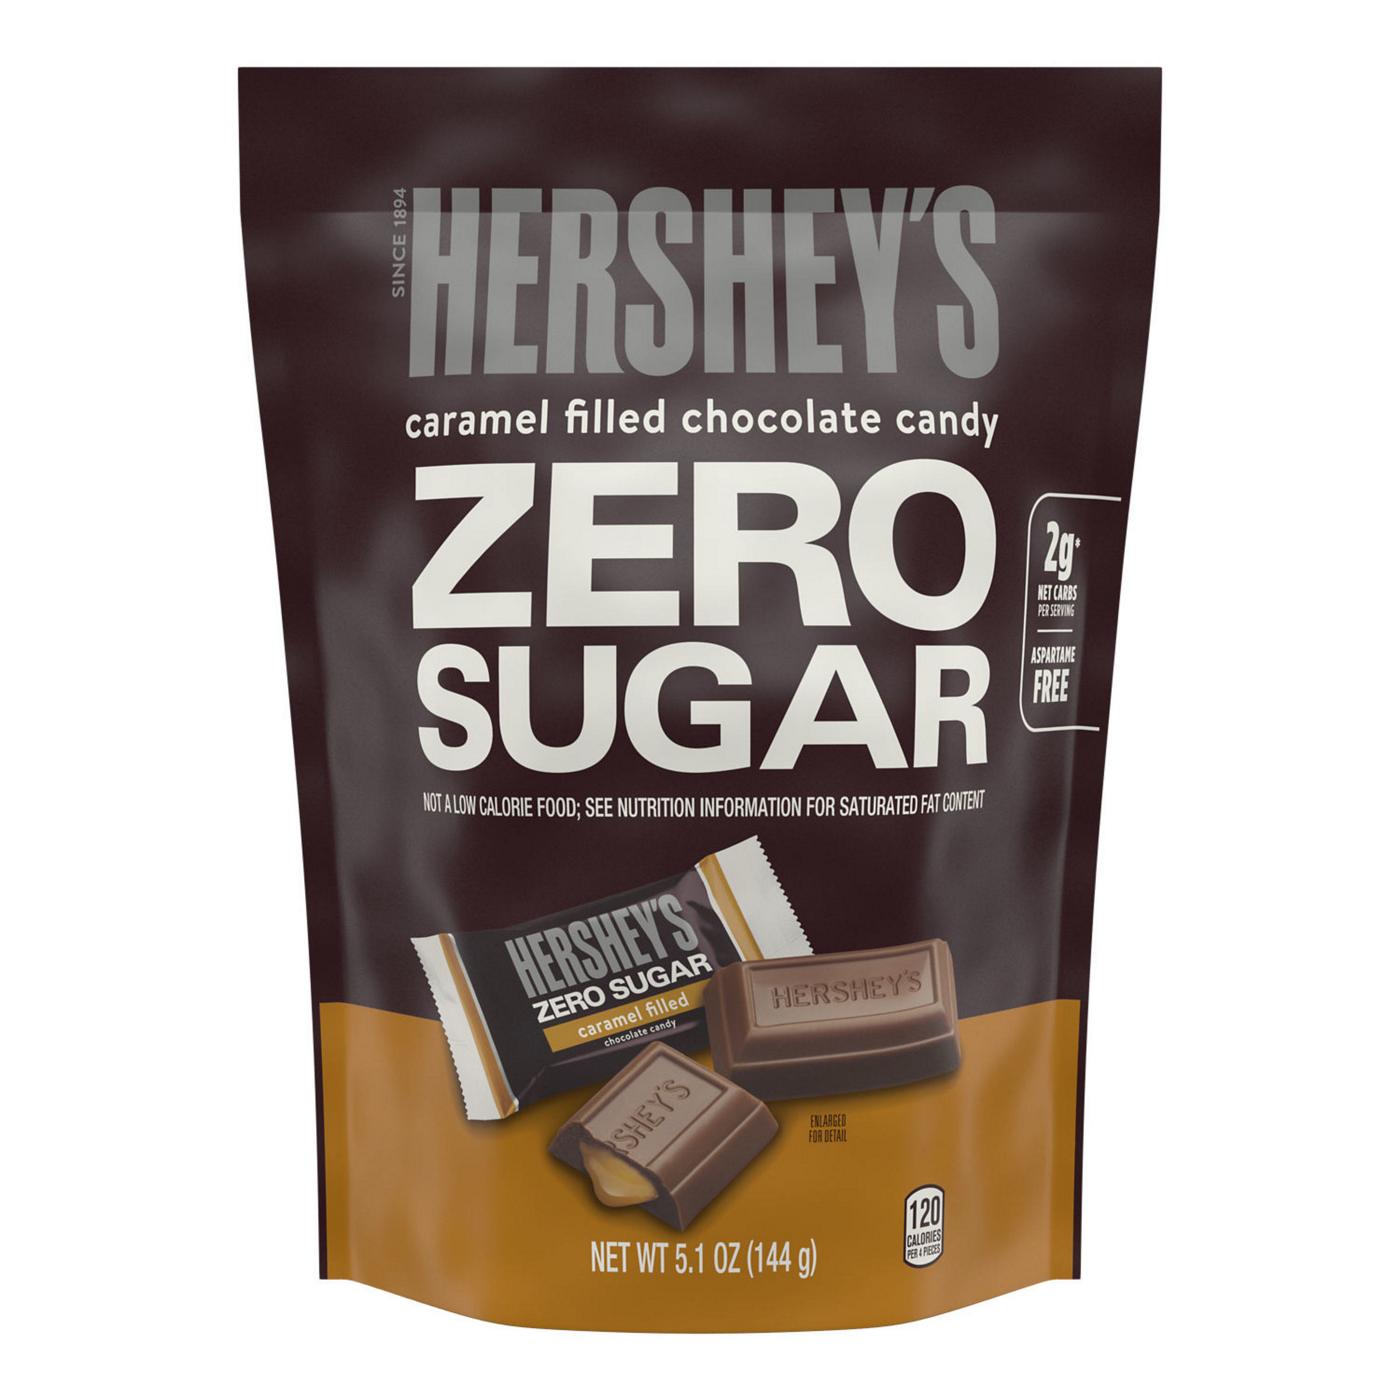 Hershey's Zero Sugar Caramel Filled Chocolate Candy; image 1 of 3